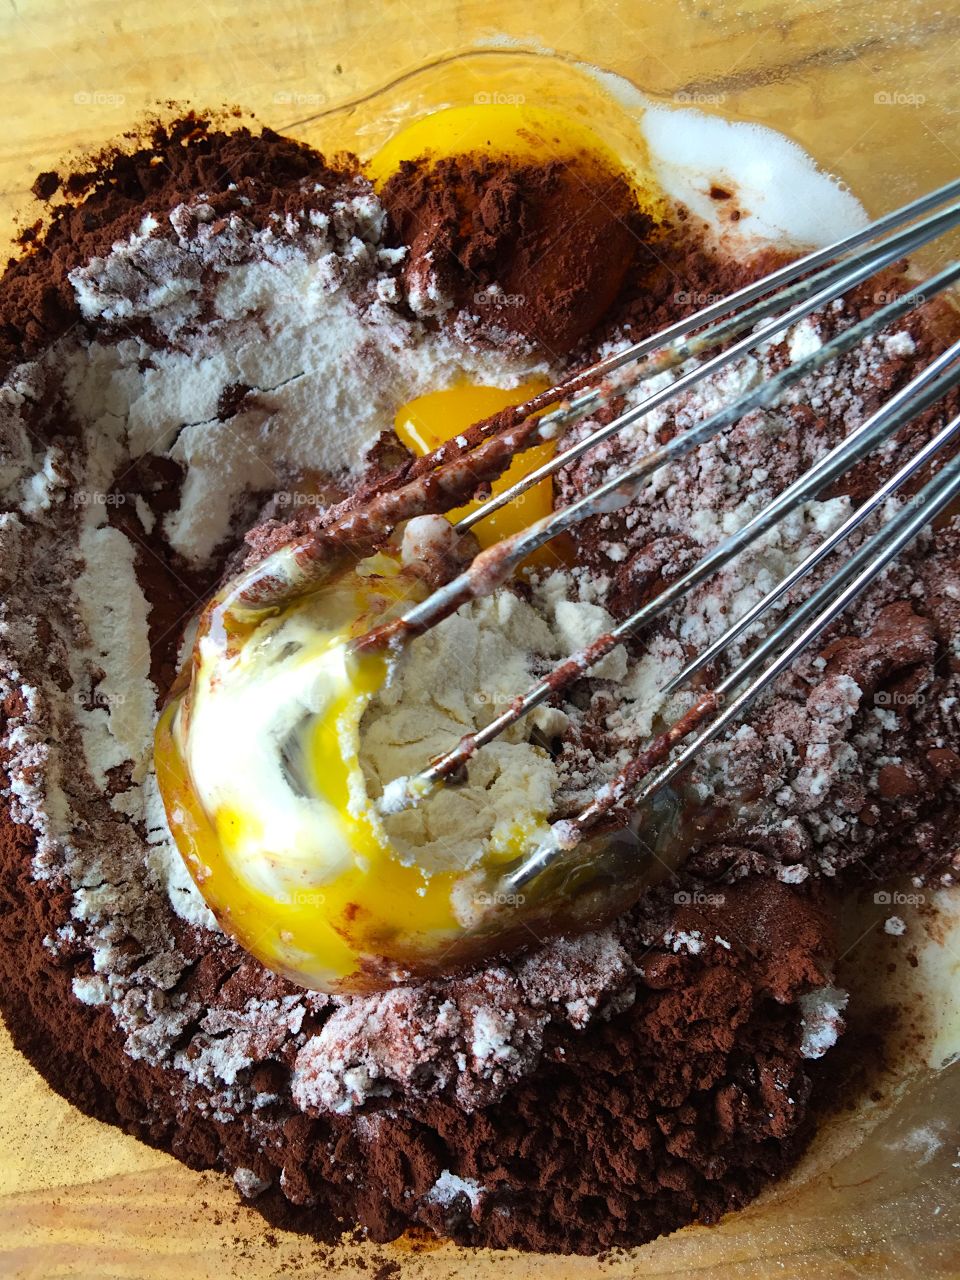 Whisking egg into chocolate cake batter